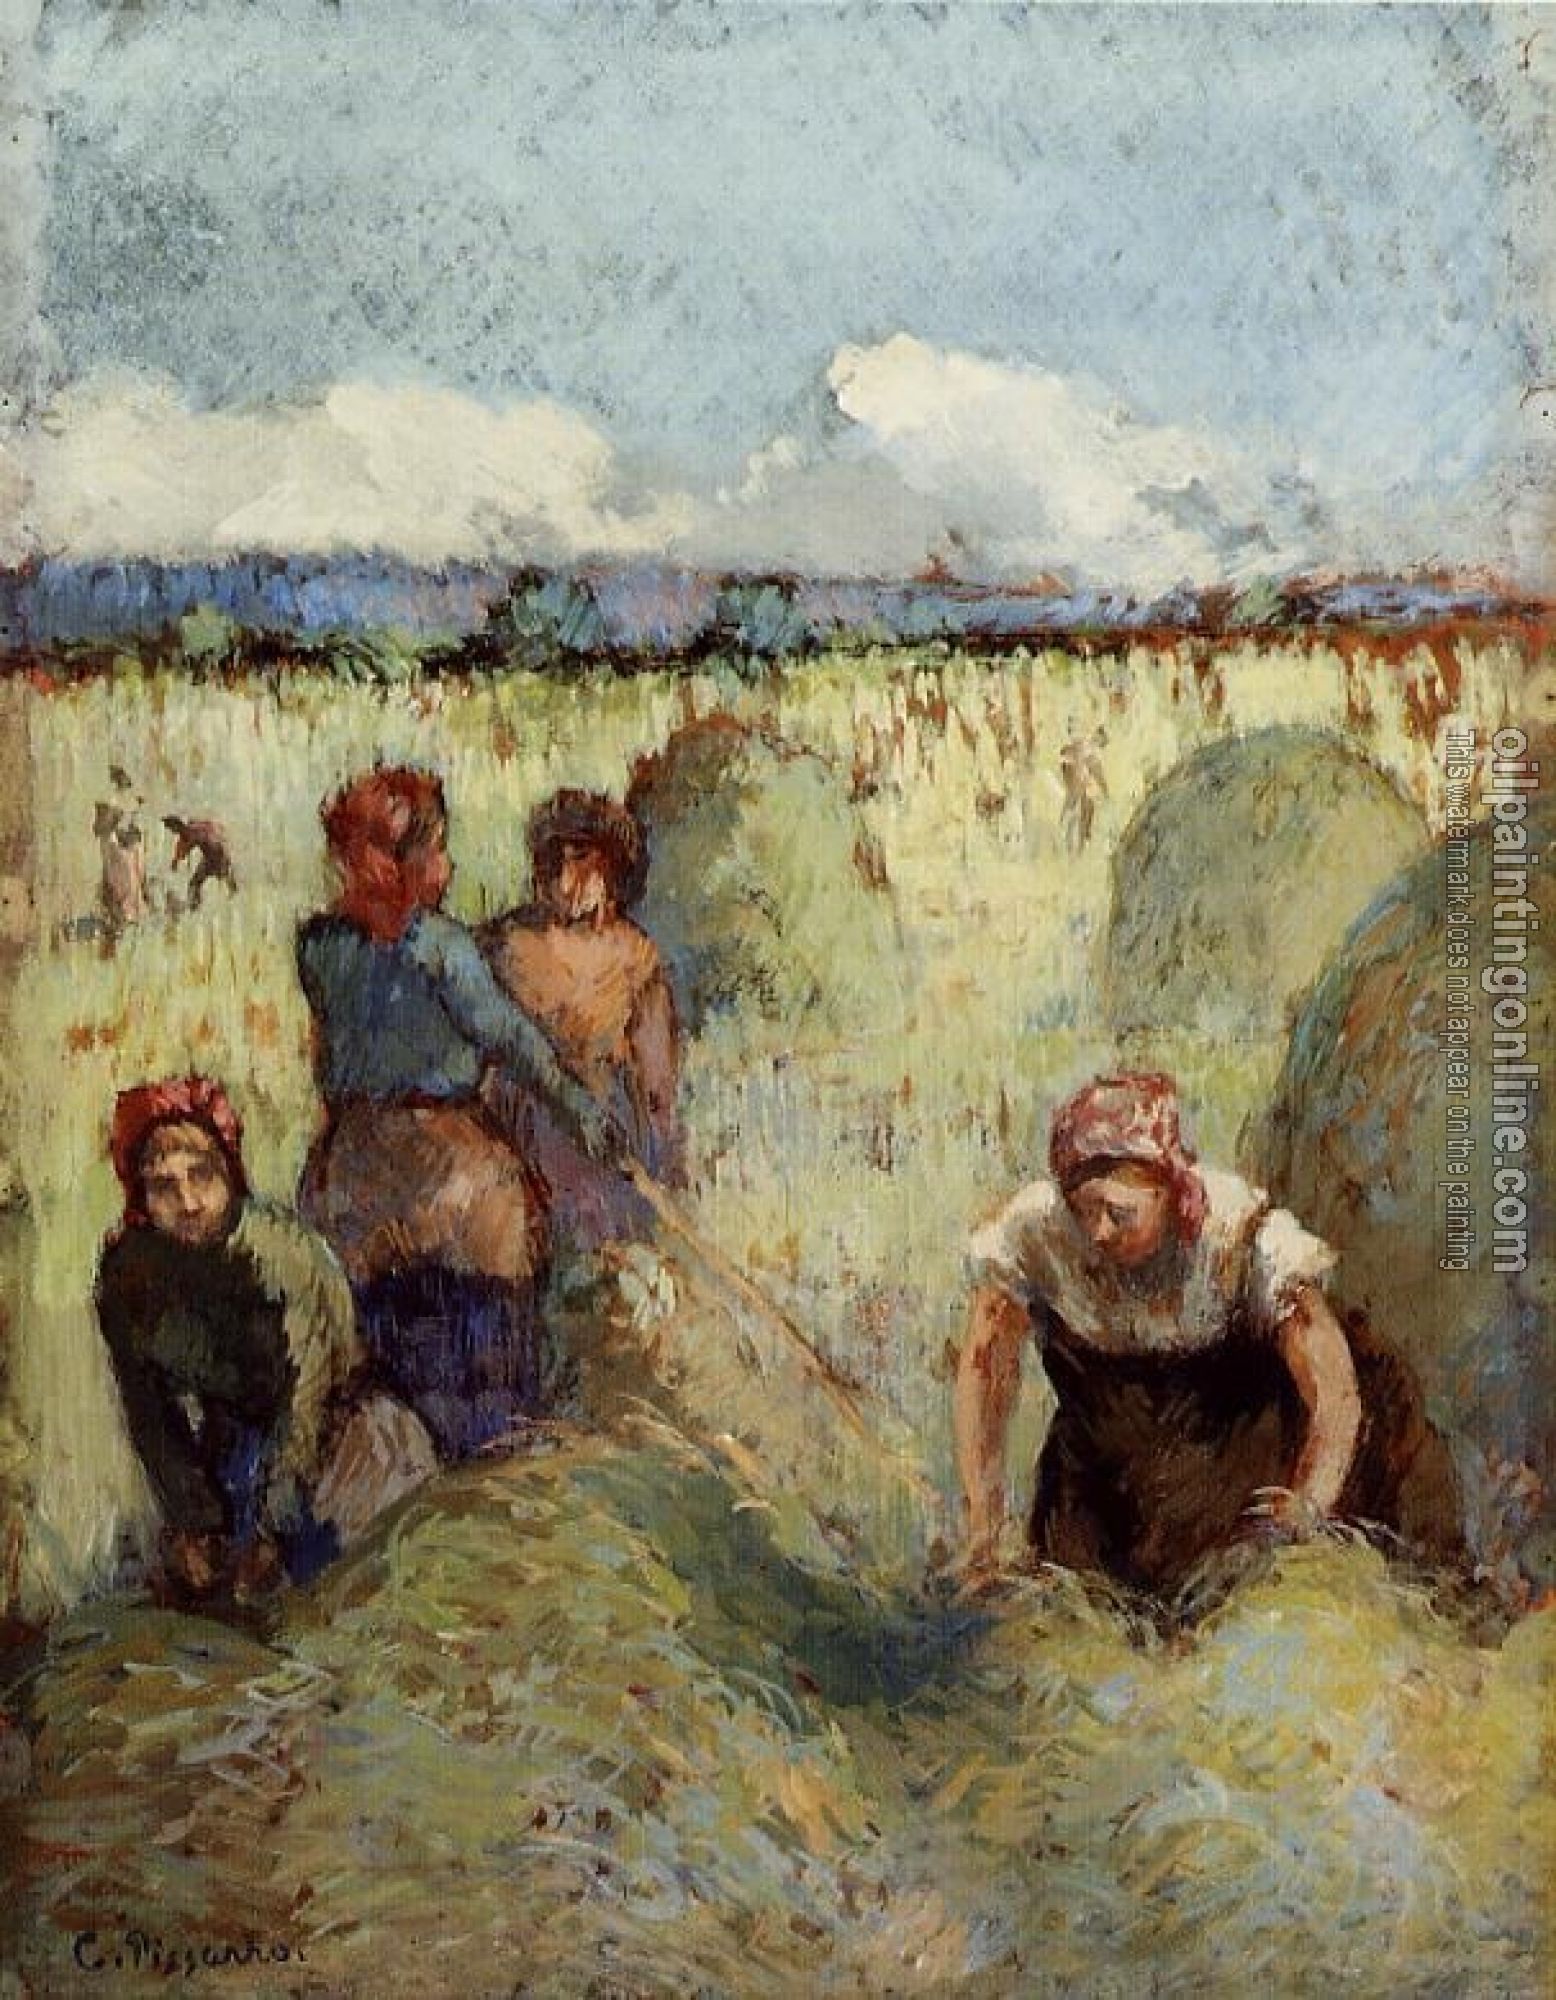 Pissarro, Camille - Making Hay